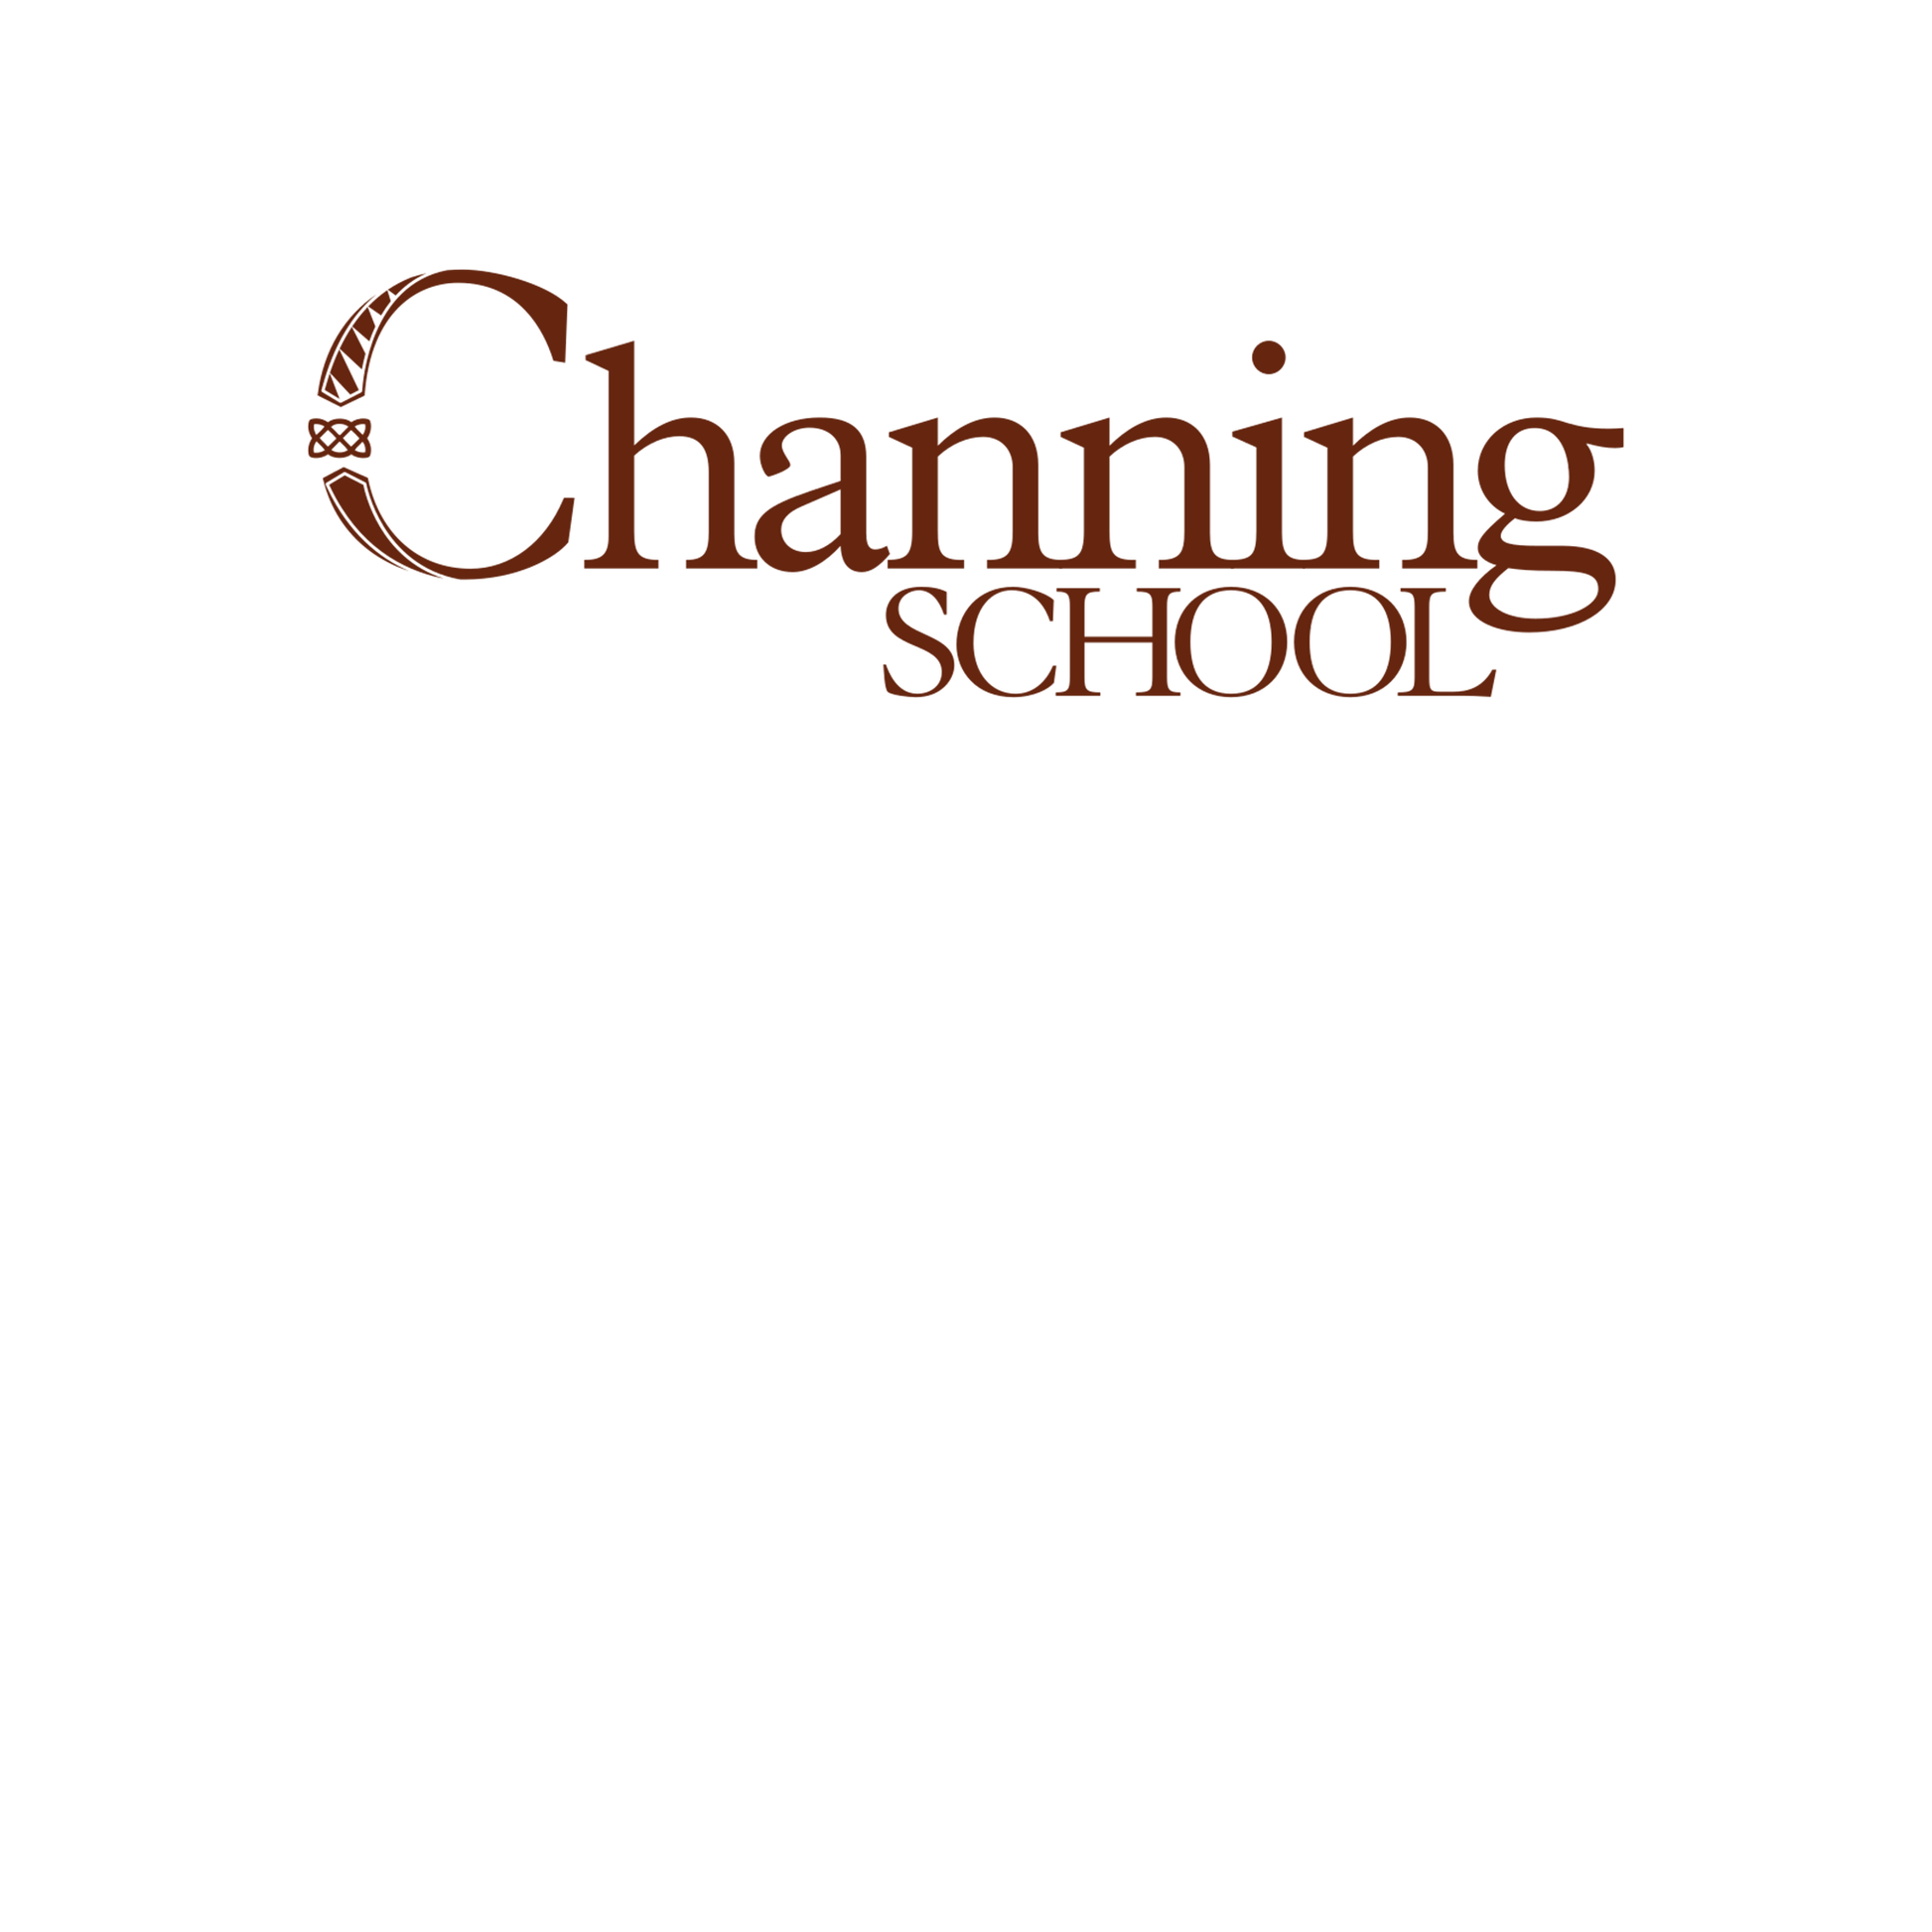 Channing School: 11+ English (2012) [Version: Group 2]